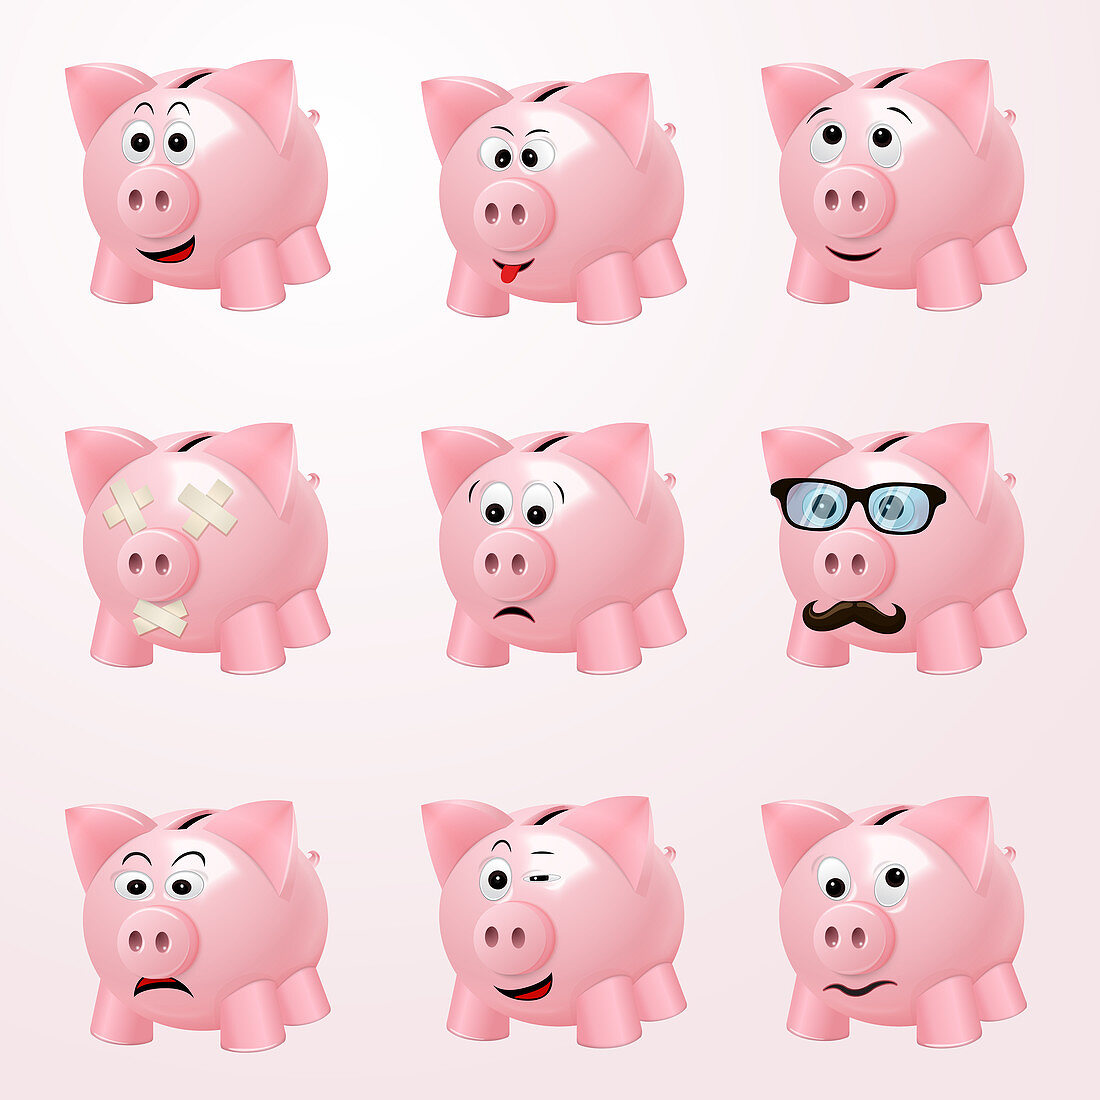 Piggy bank icons, illustration